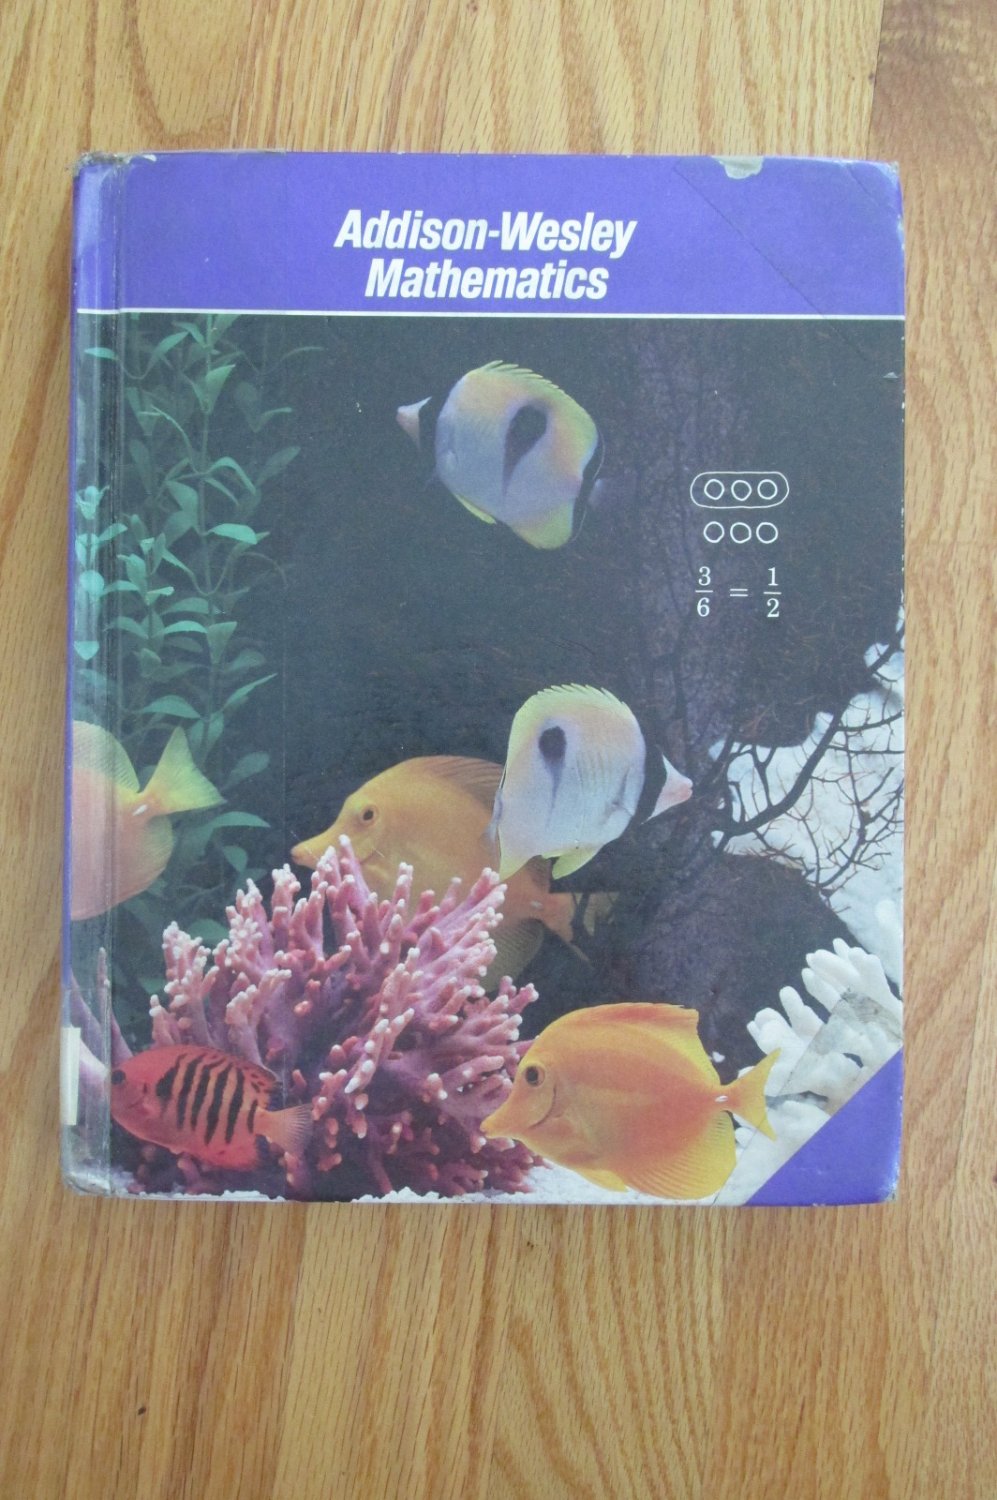 addison-wesley-mathematics-4th-grade-homeschool-student-text-book-isbn-0-201-26400-5-1987